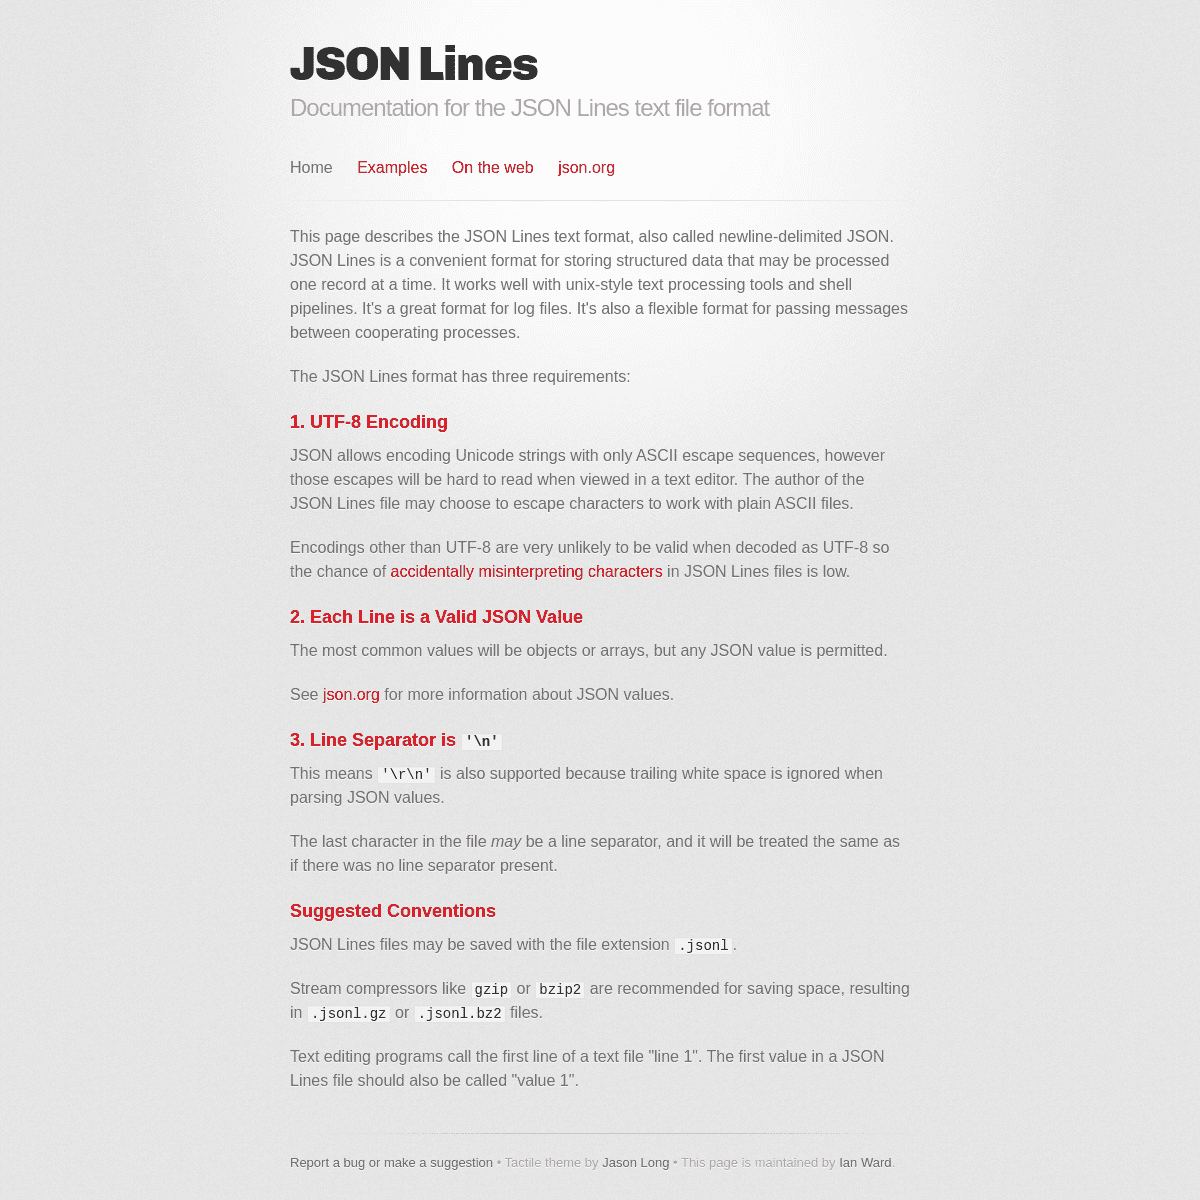 A complete backup of https://jsonlines.org